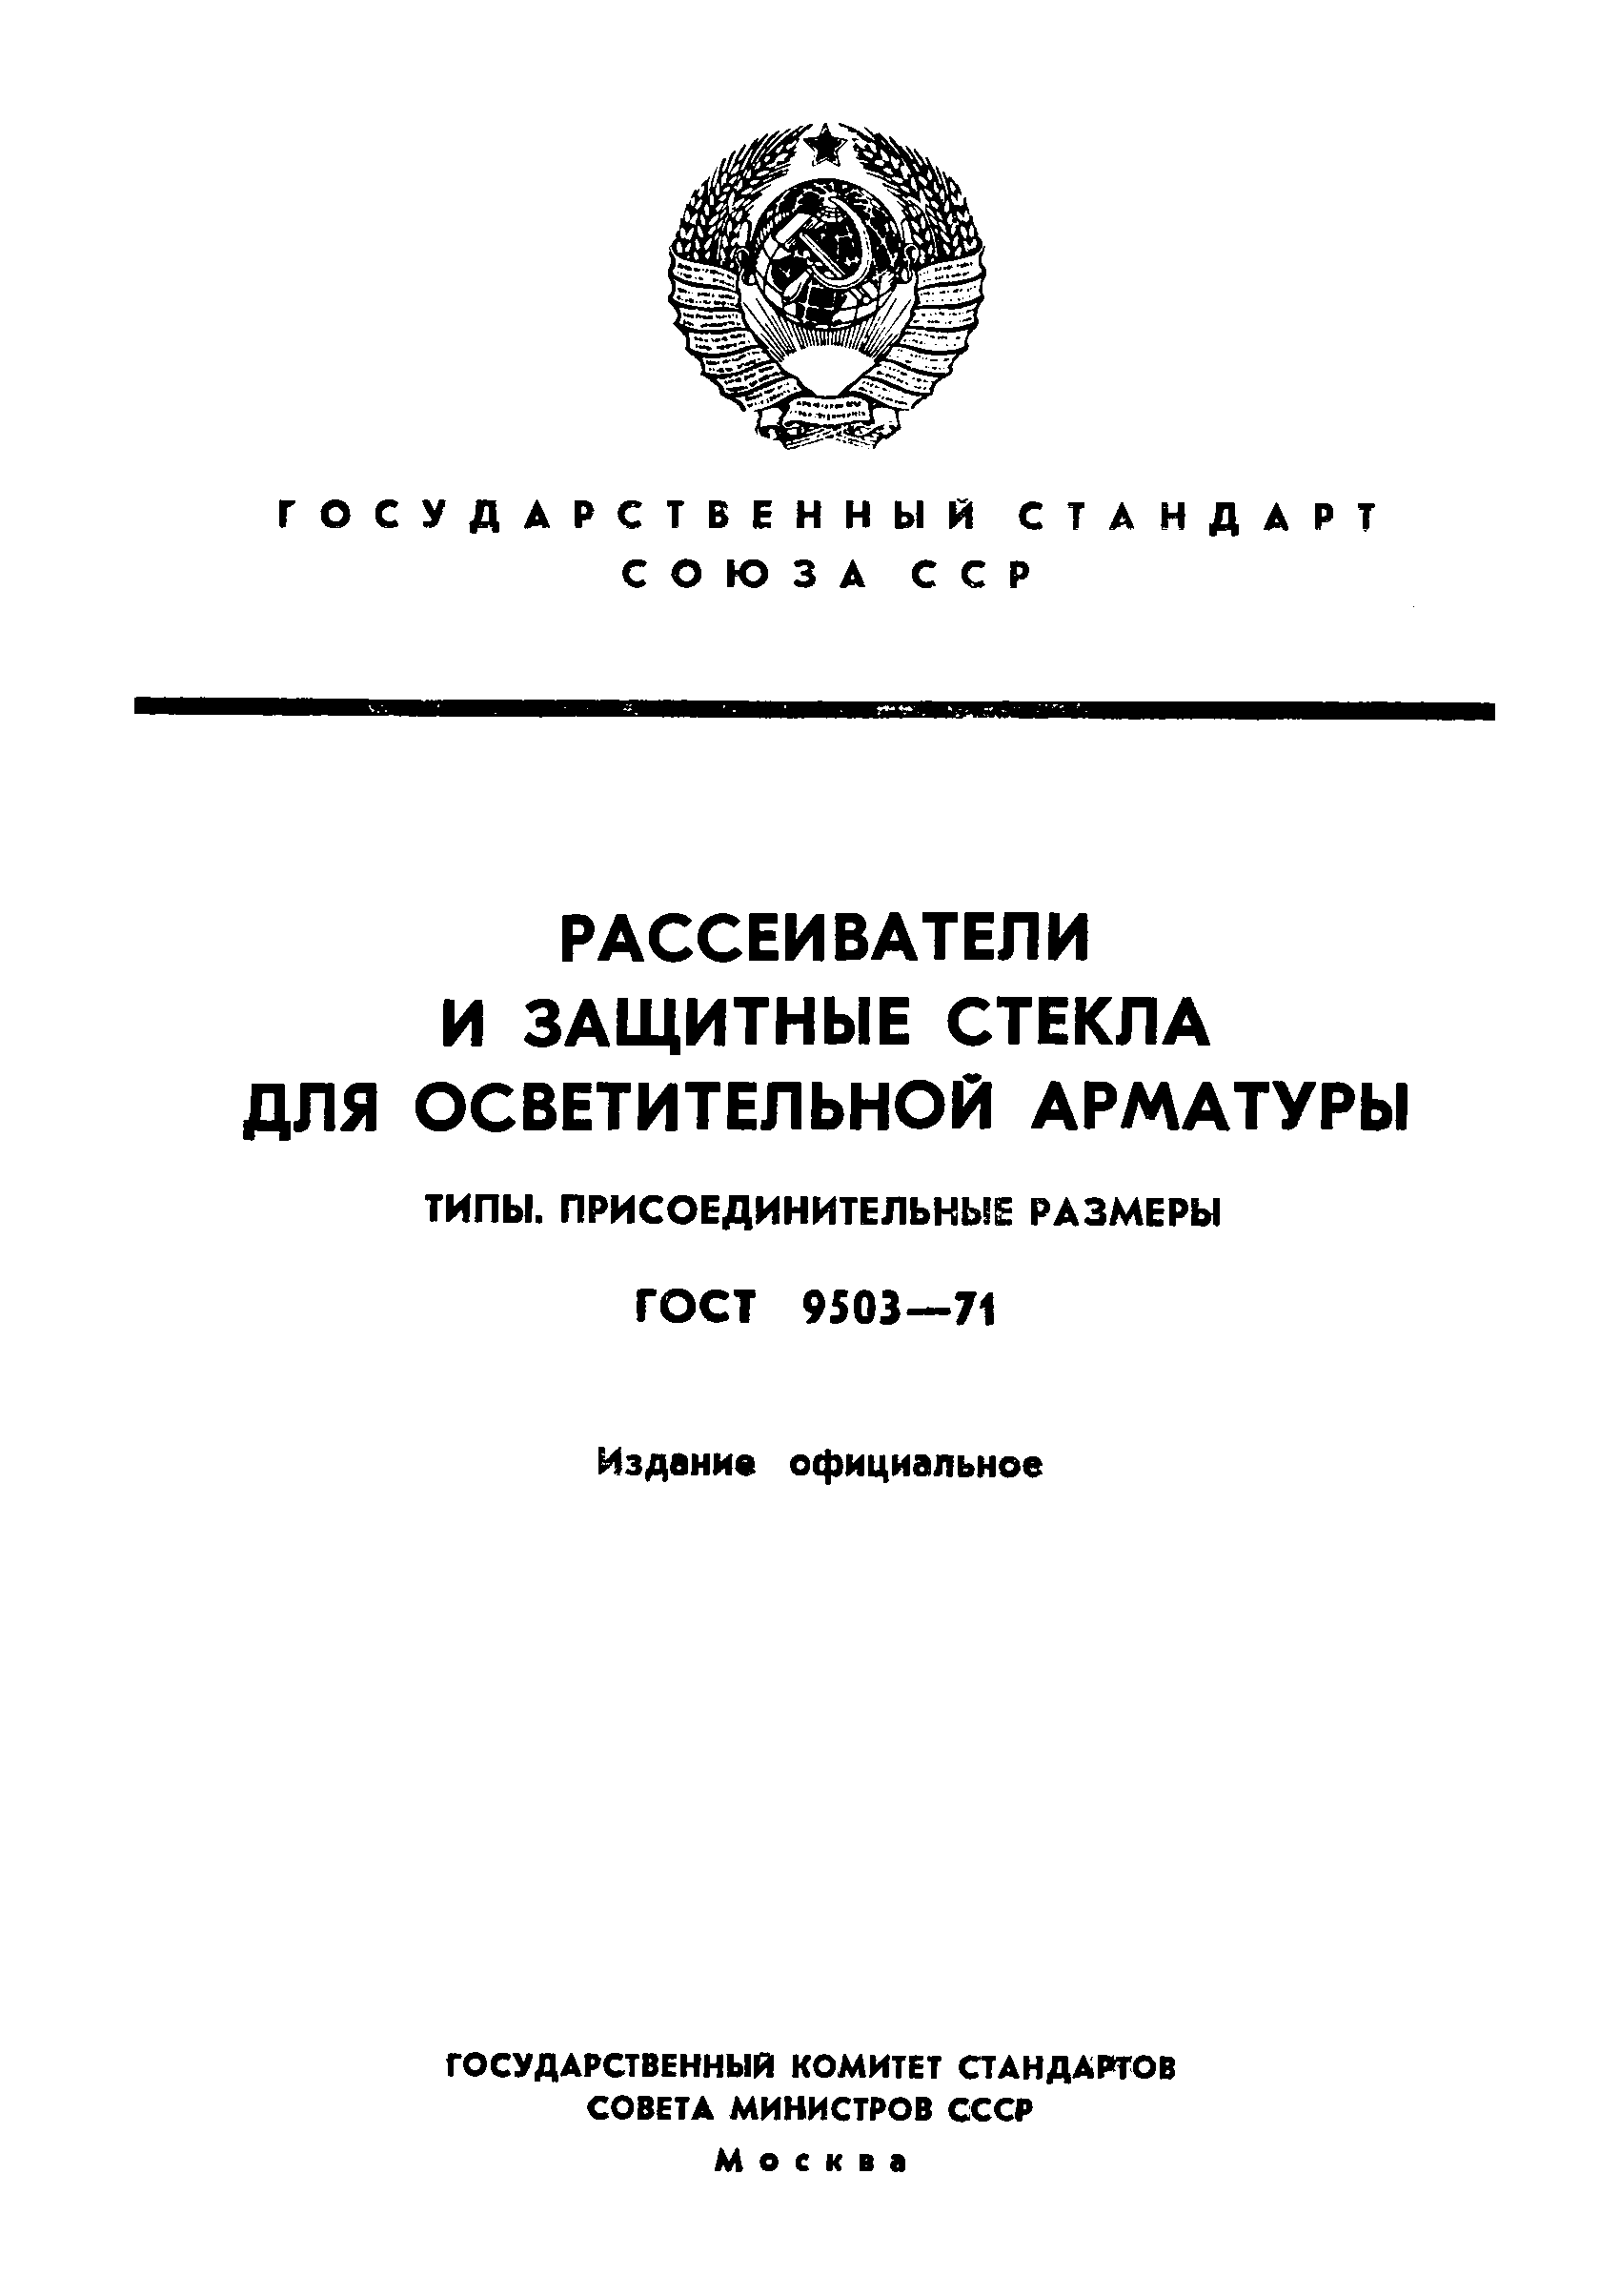 ГОСТ 9503-71